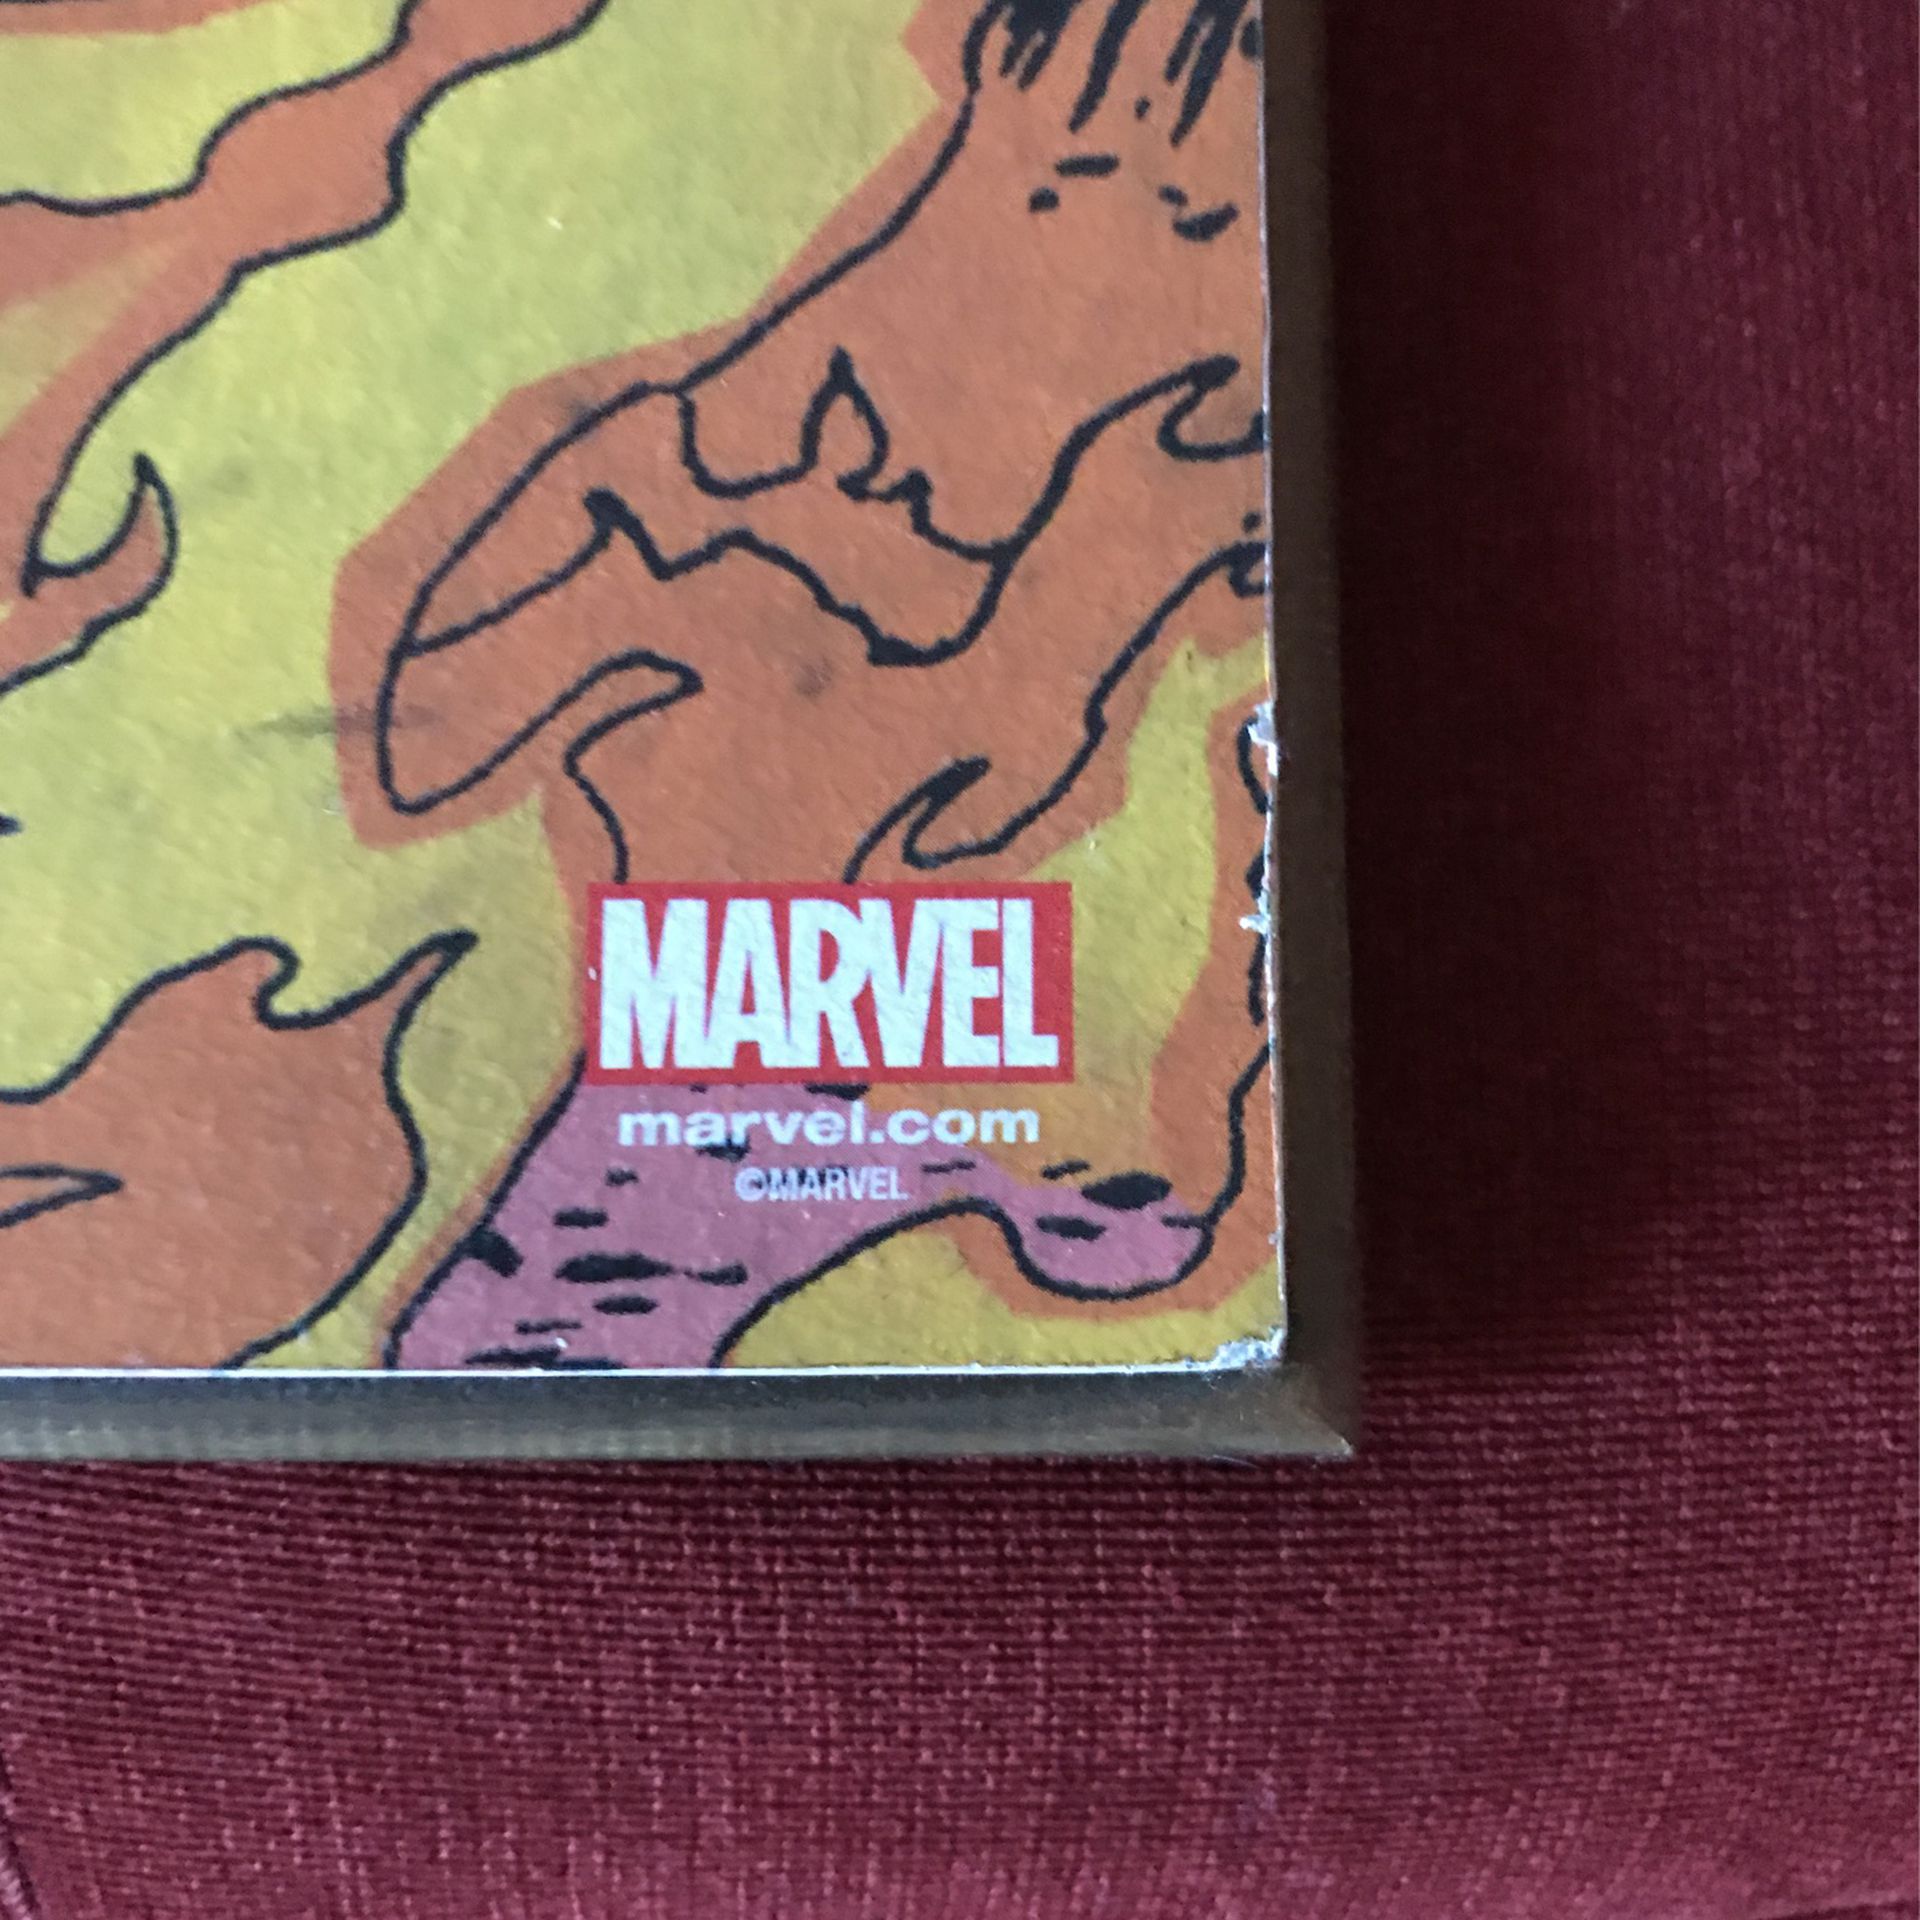 Marvel comics wood plaque Thor